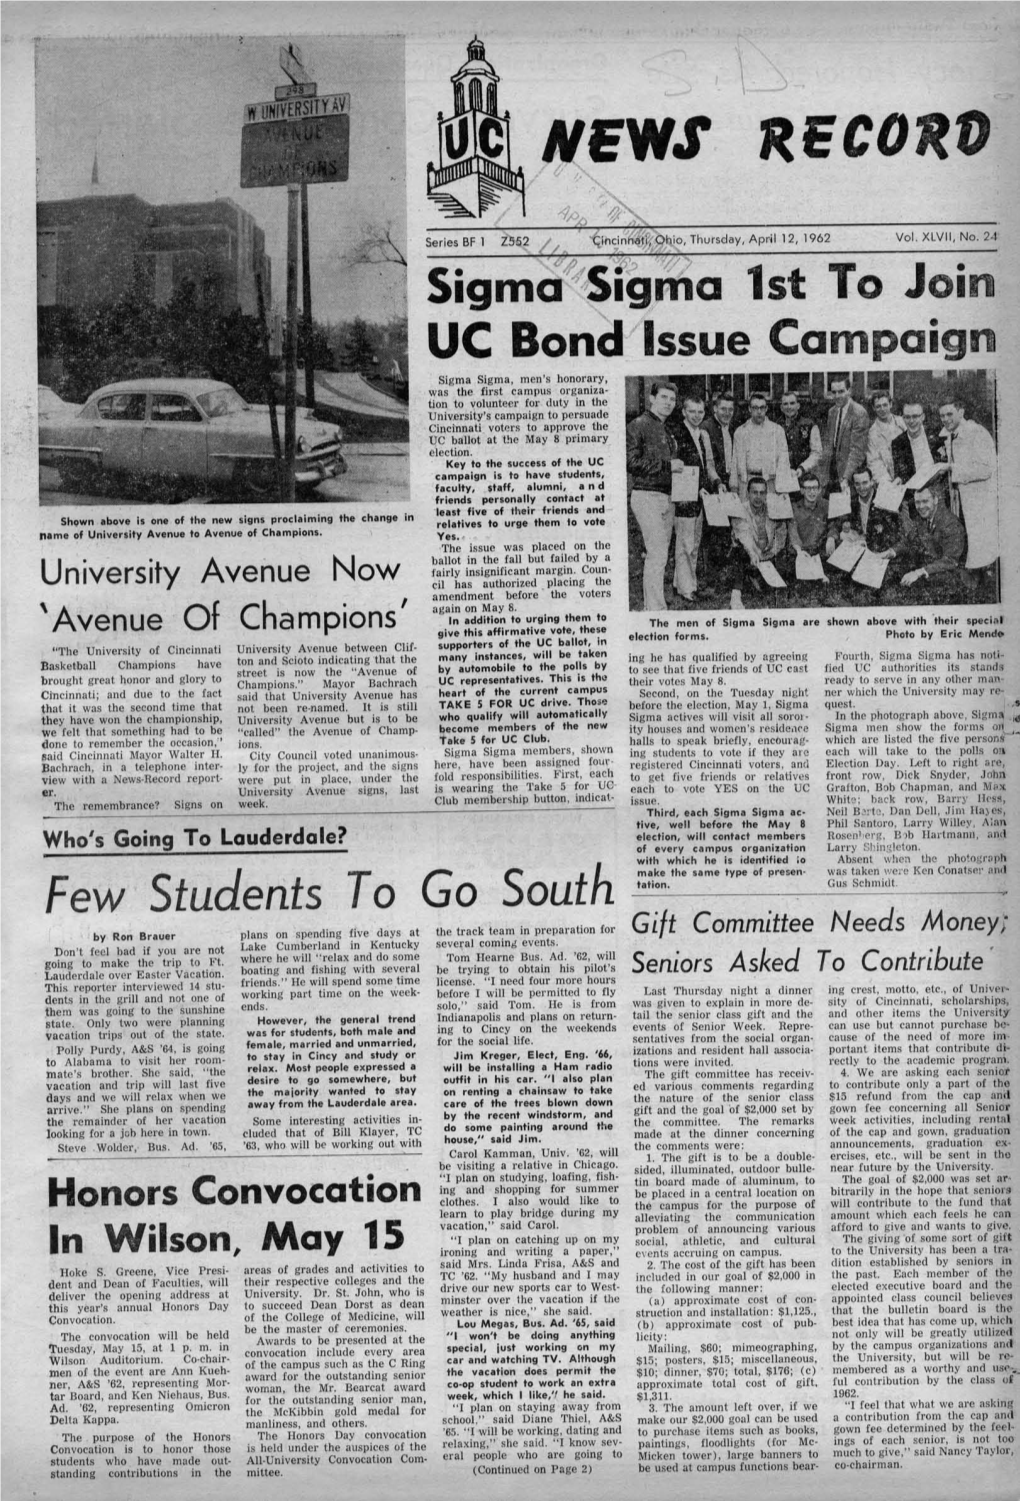 University of Cincinnati News Record. Thursday, April 12, 1962. Vol. XLVII, No